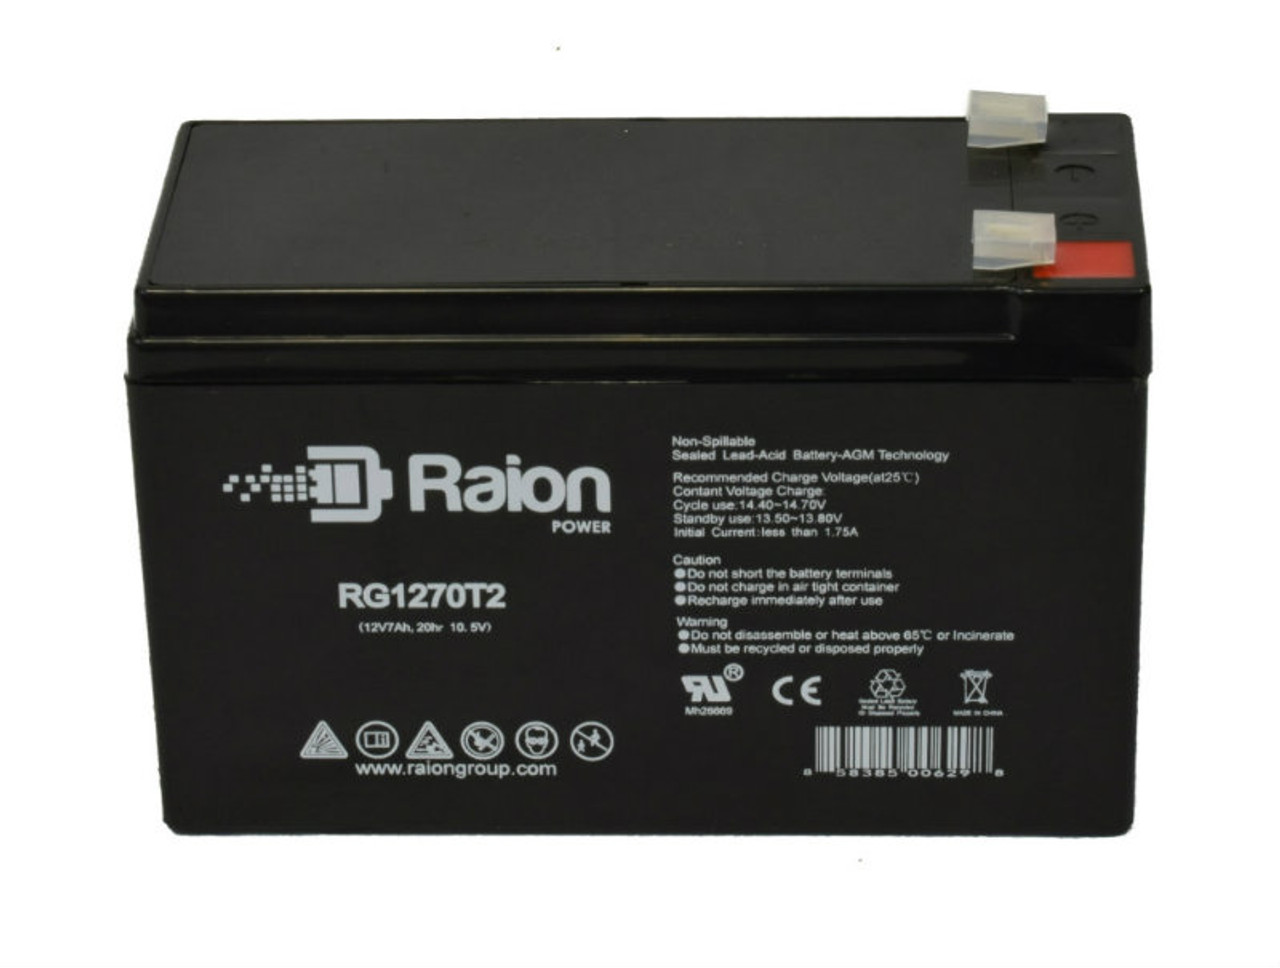 Raion Power RG1270T1 12V 7Ah Lead Acid Battery for Cybex 625AT Arc Trainer